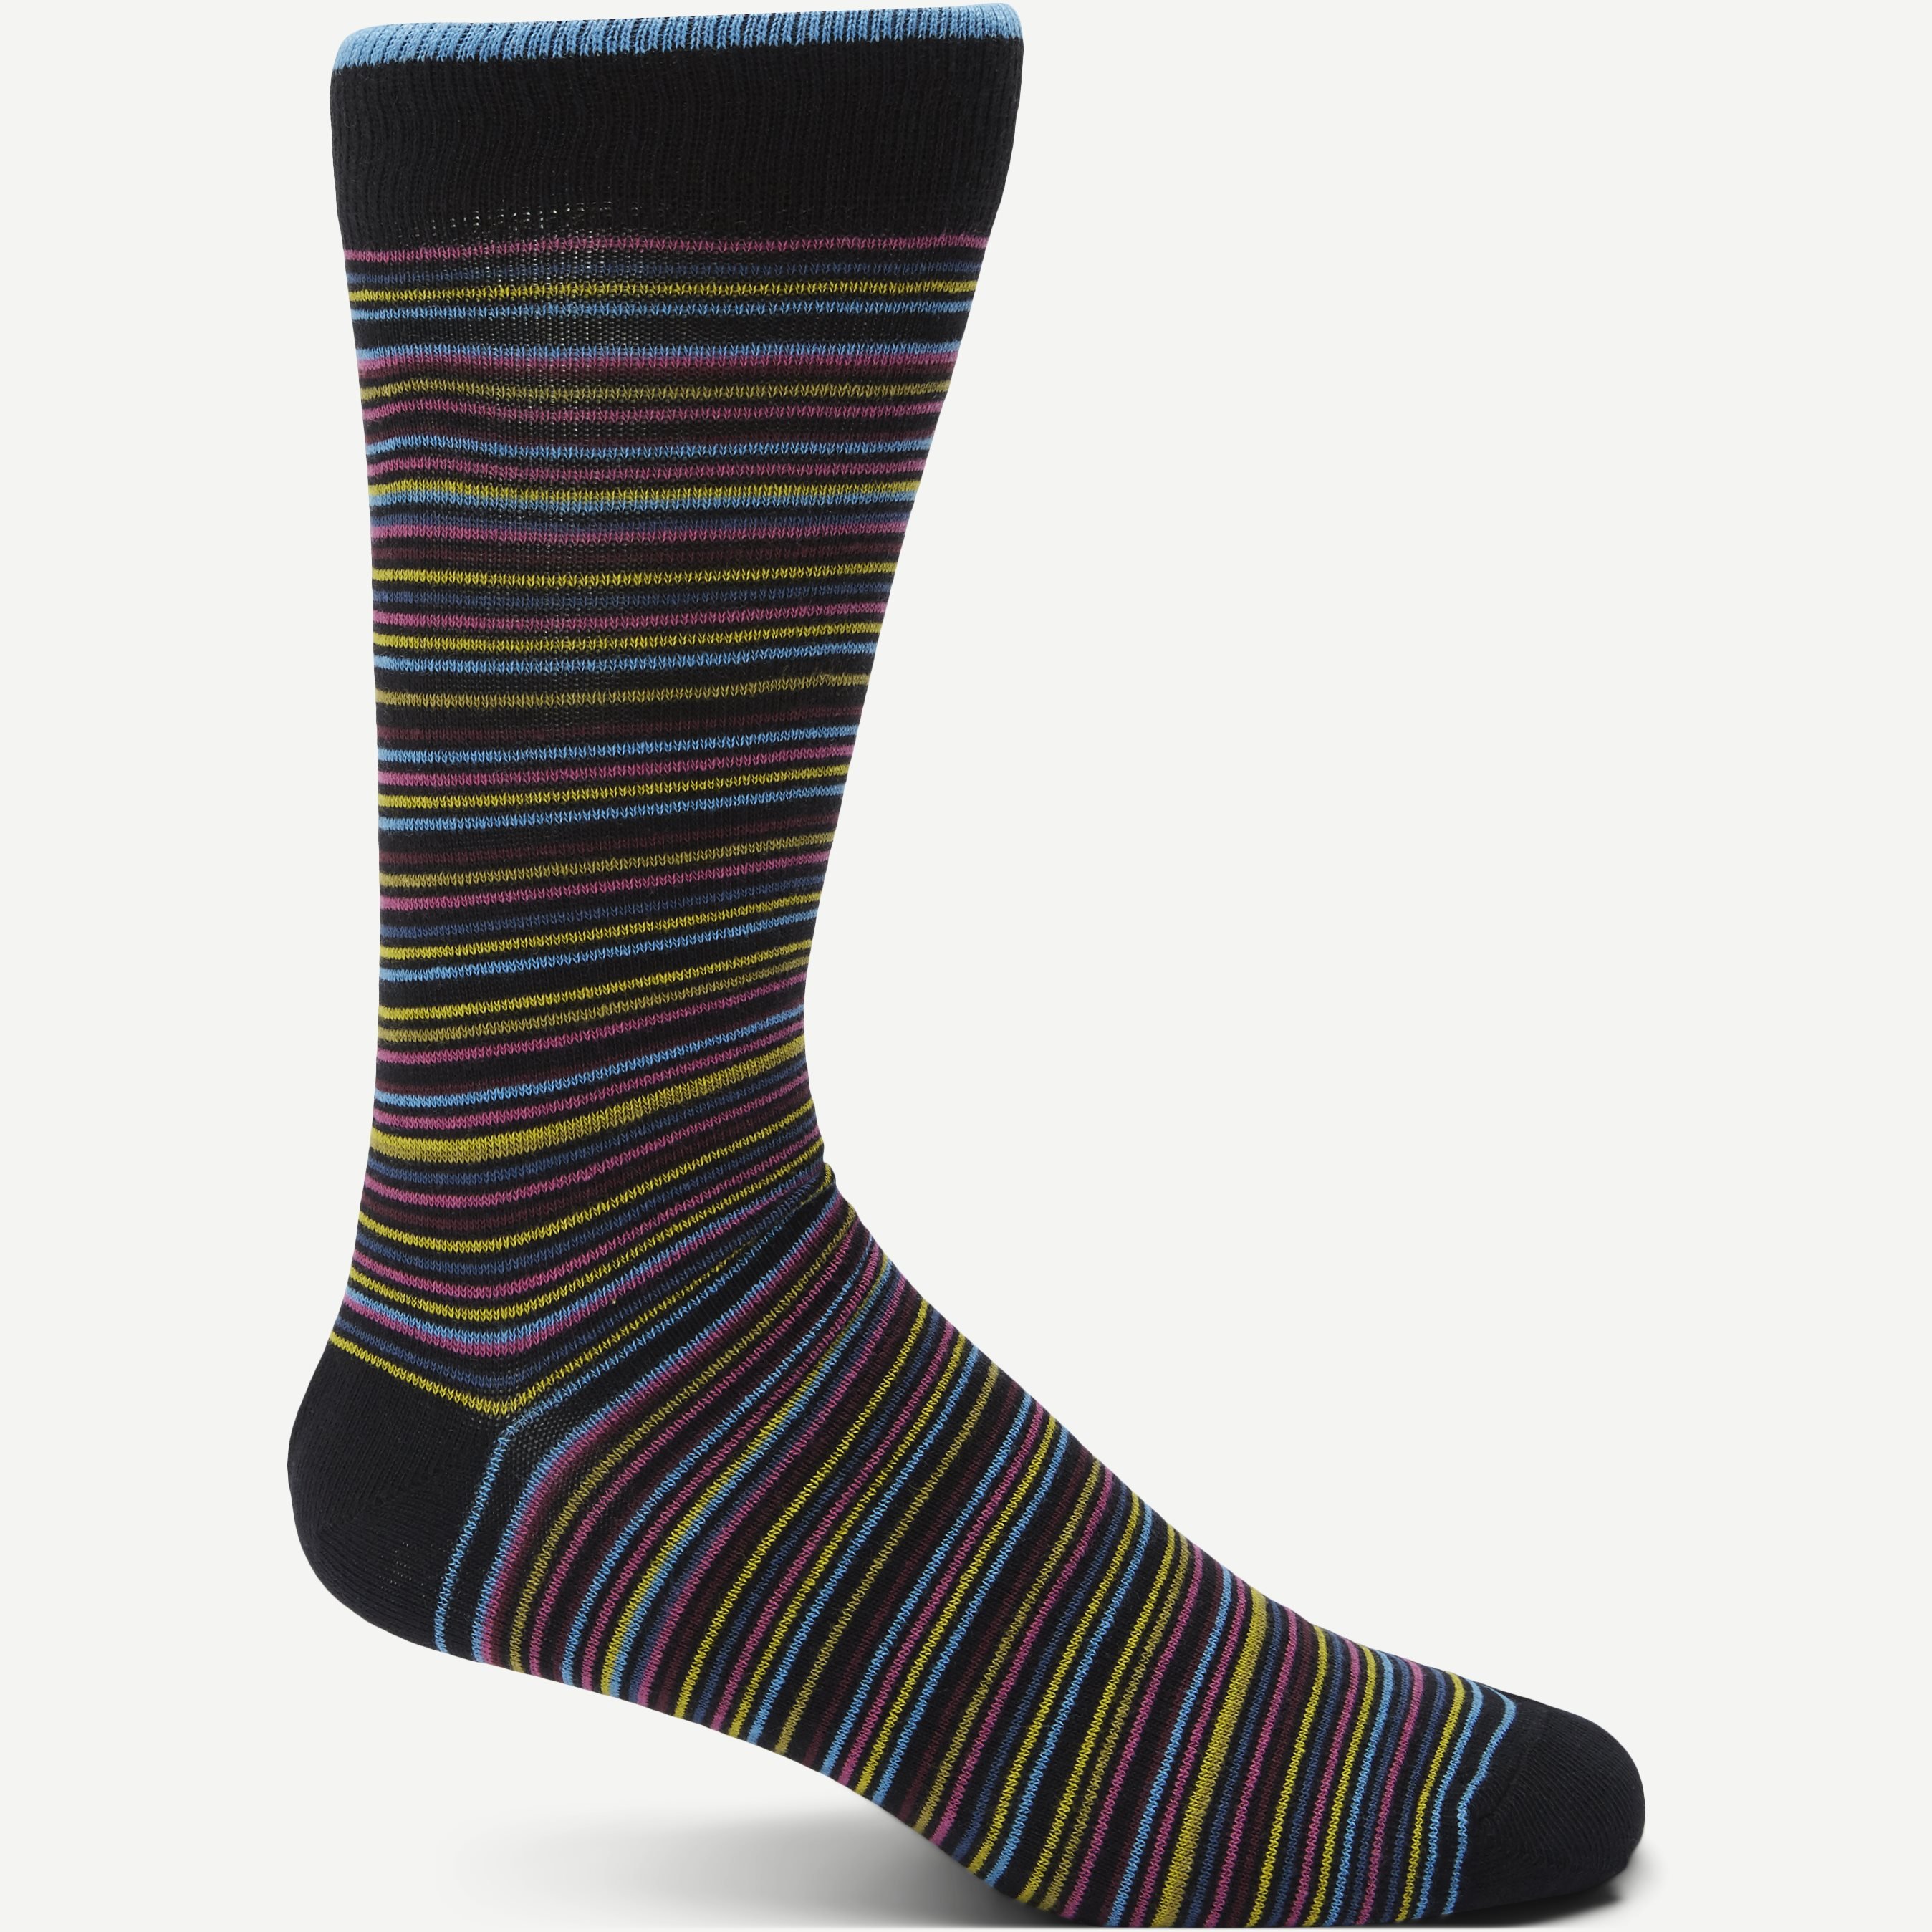 Simple Socks Socks ZOEY Blue